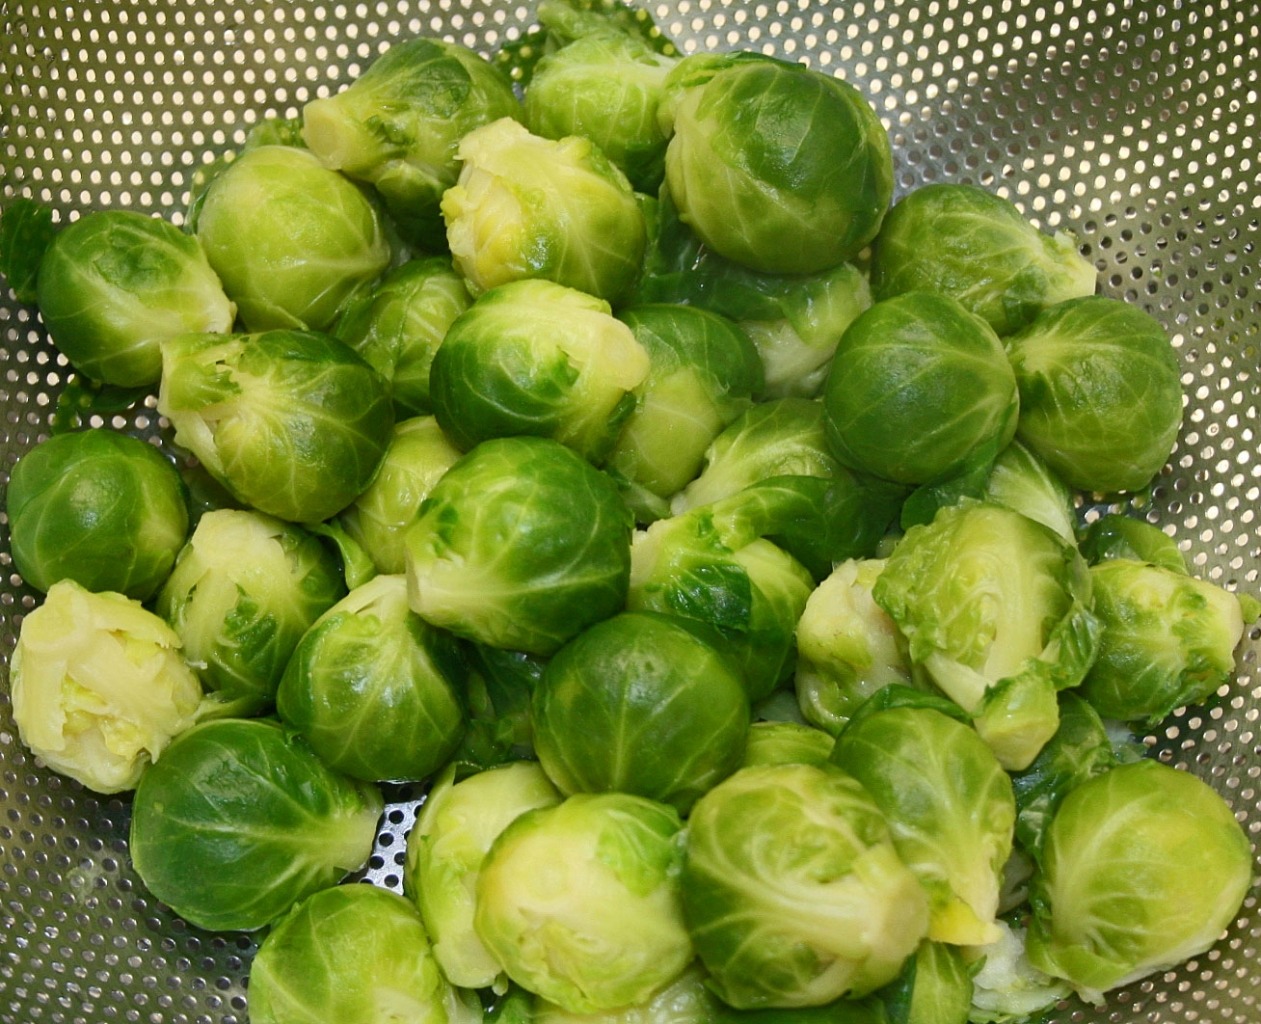 Brussels Sprouts | Image Credit: Lebensmittelfotos pixabay.com